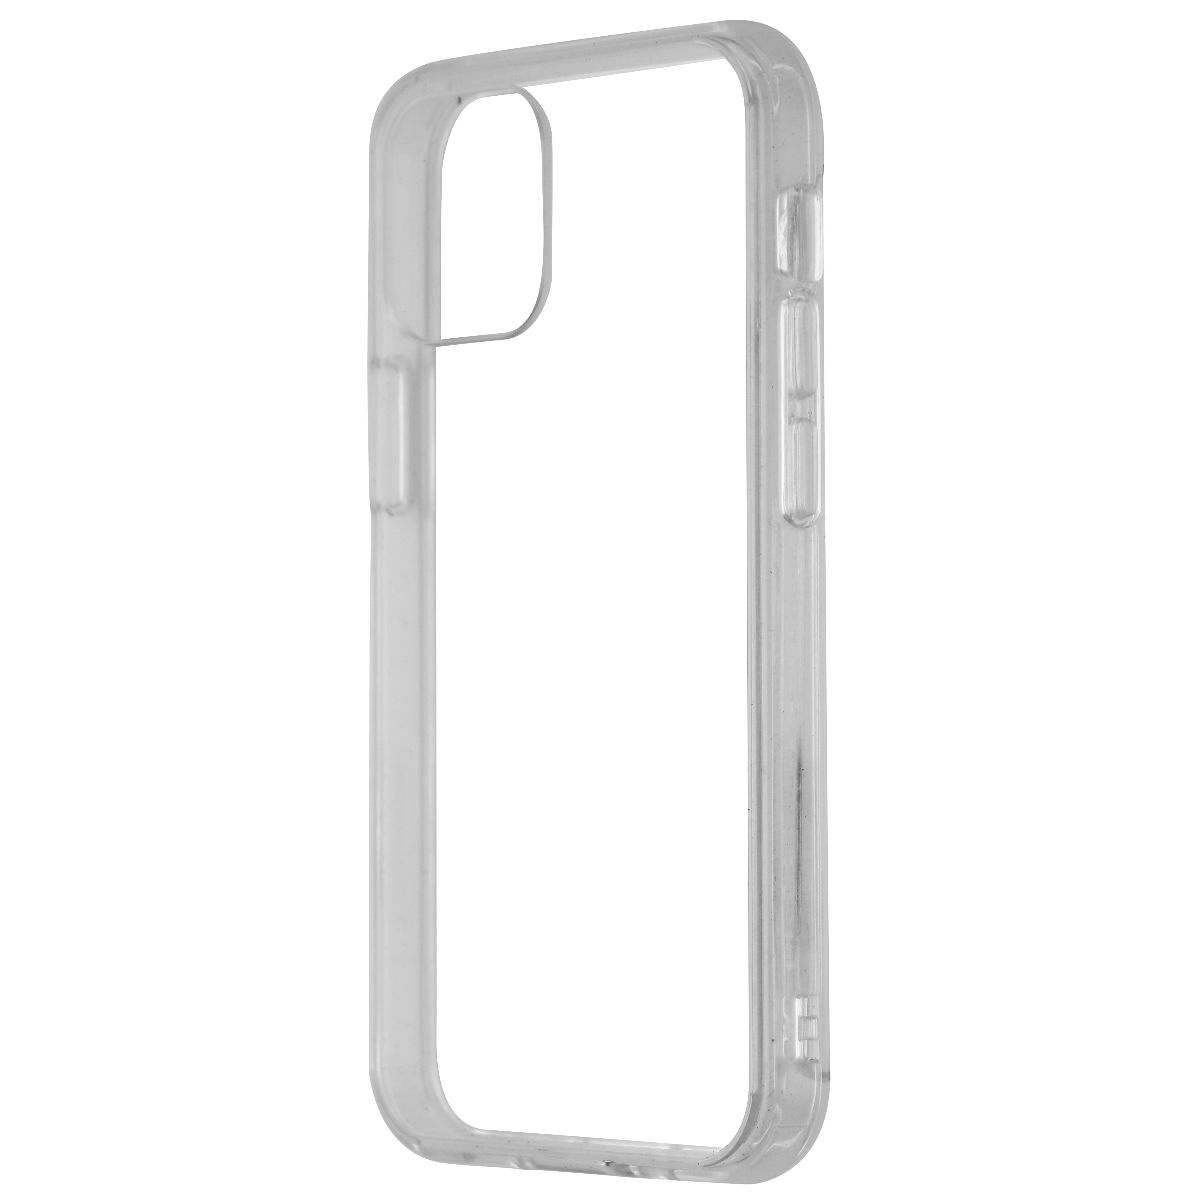 UBREAKIFIX Slim Hardshell Case For Apple IPhone 12 Mini Smartphones - Clear